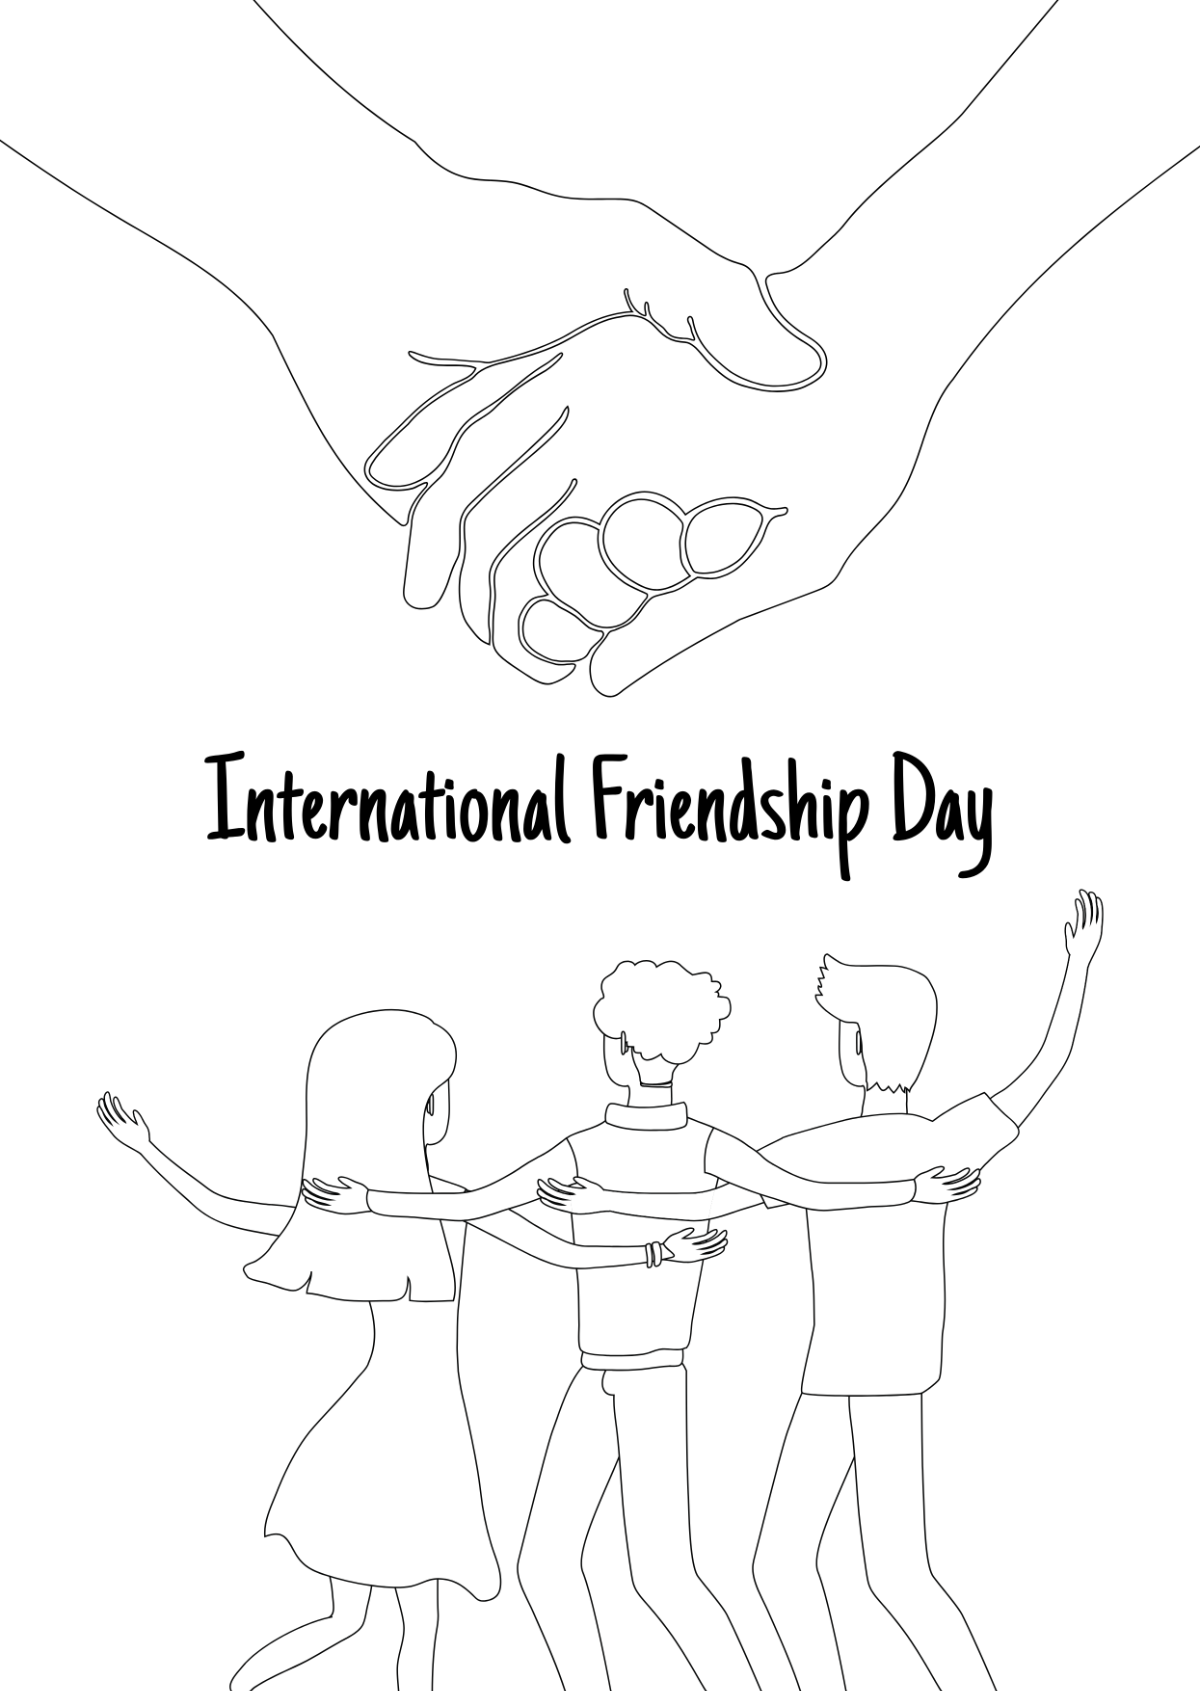 International Friendship Day Drawing